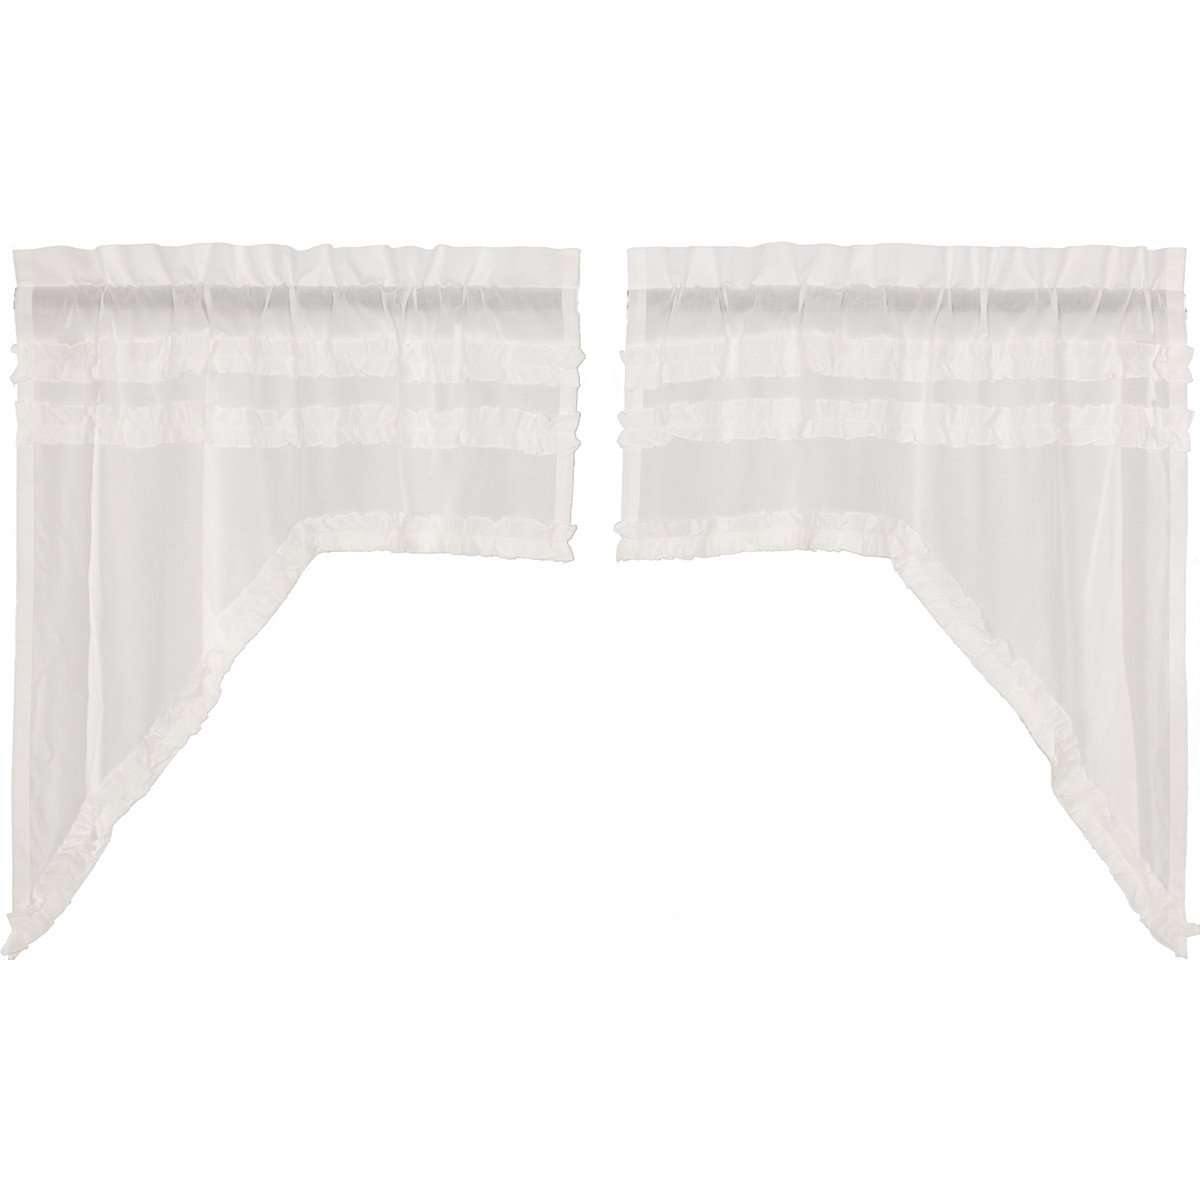 White Ruffled Sheer Petticoat Swag Curtain Set of 2 36x36x16 VHC Brands - The Fox Decor